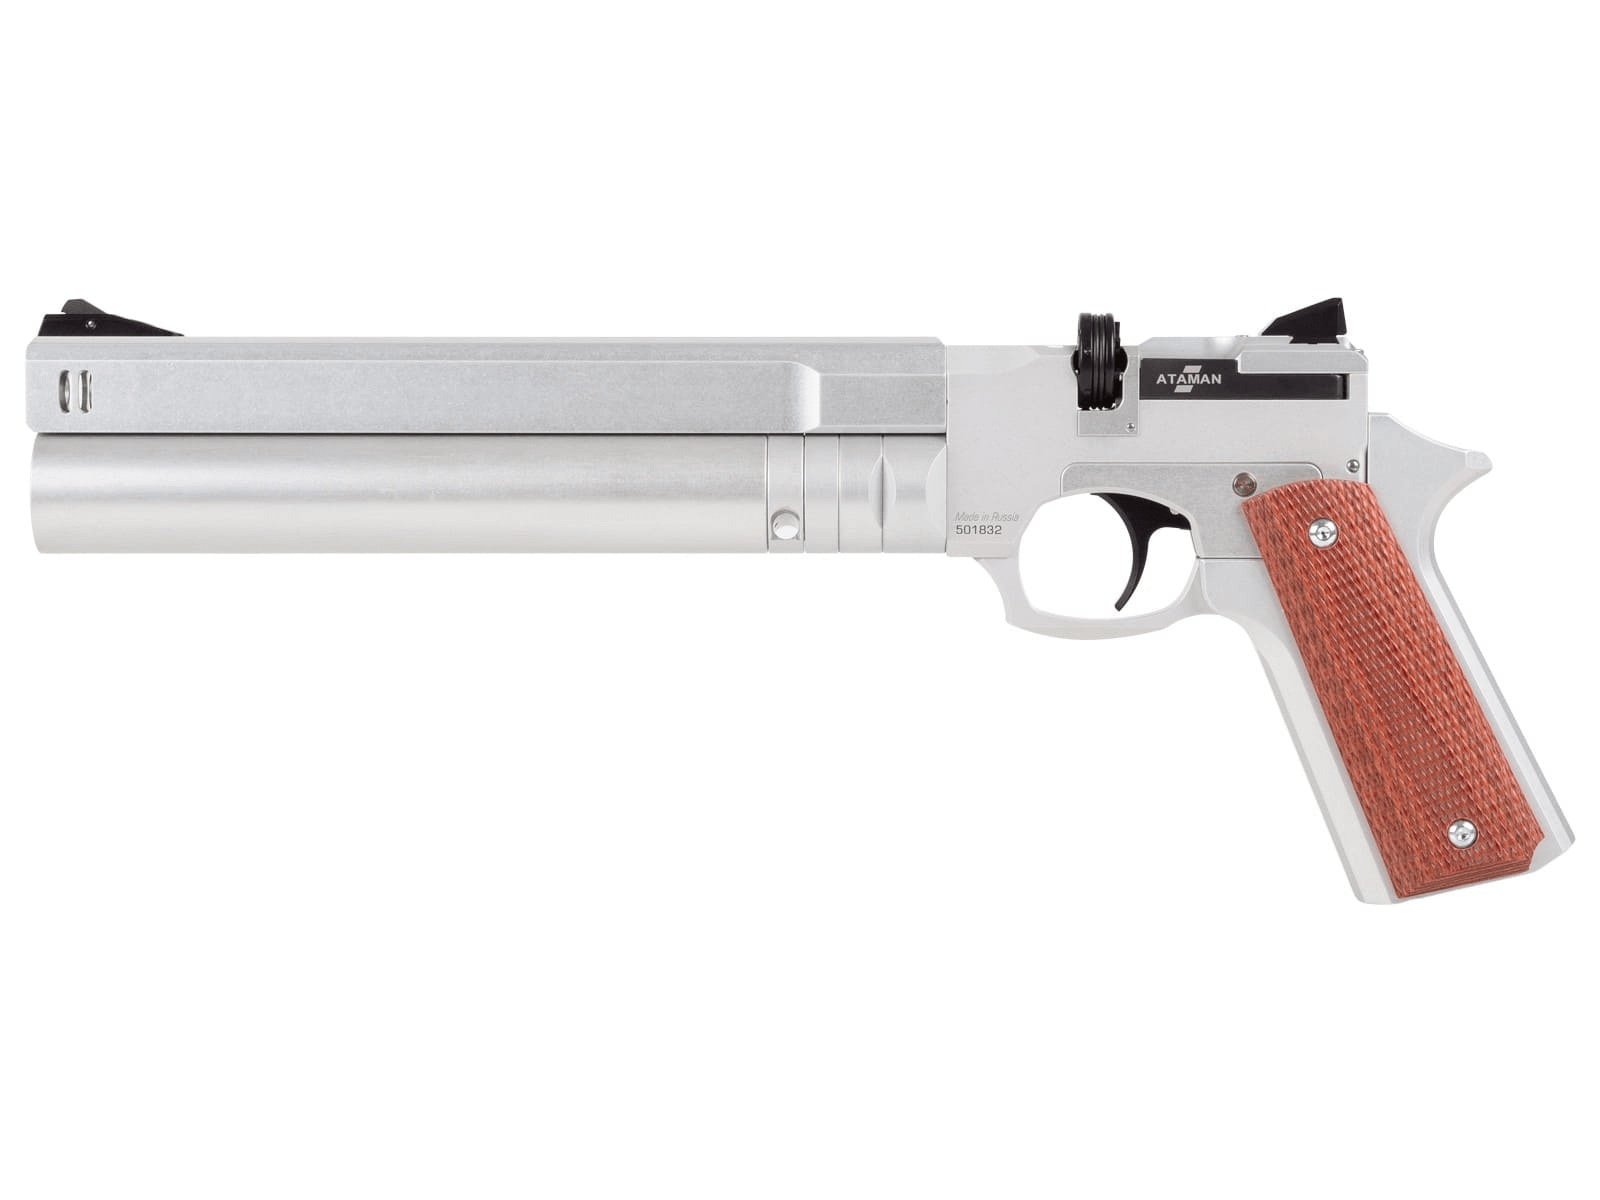 Пневматический PCP пистолет ATAMAN AP16 Silver Standart (рукоятка Metal), кал. 4.5мм